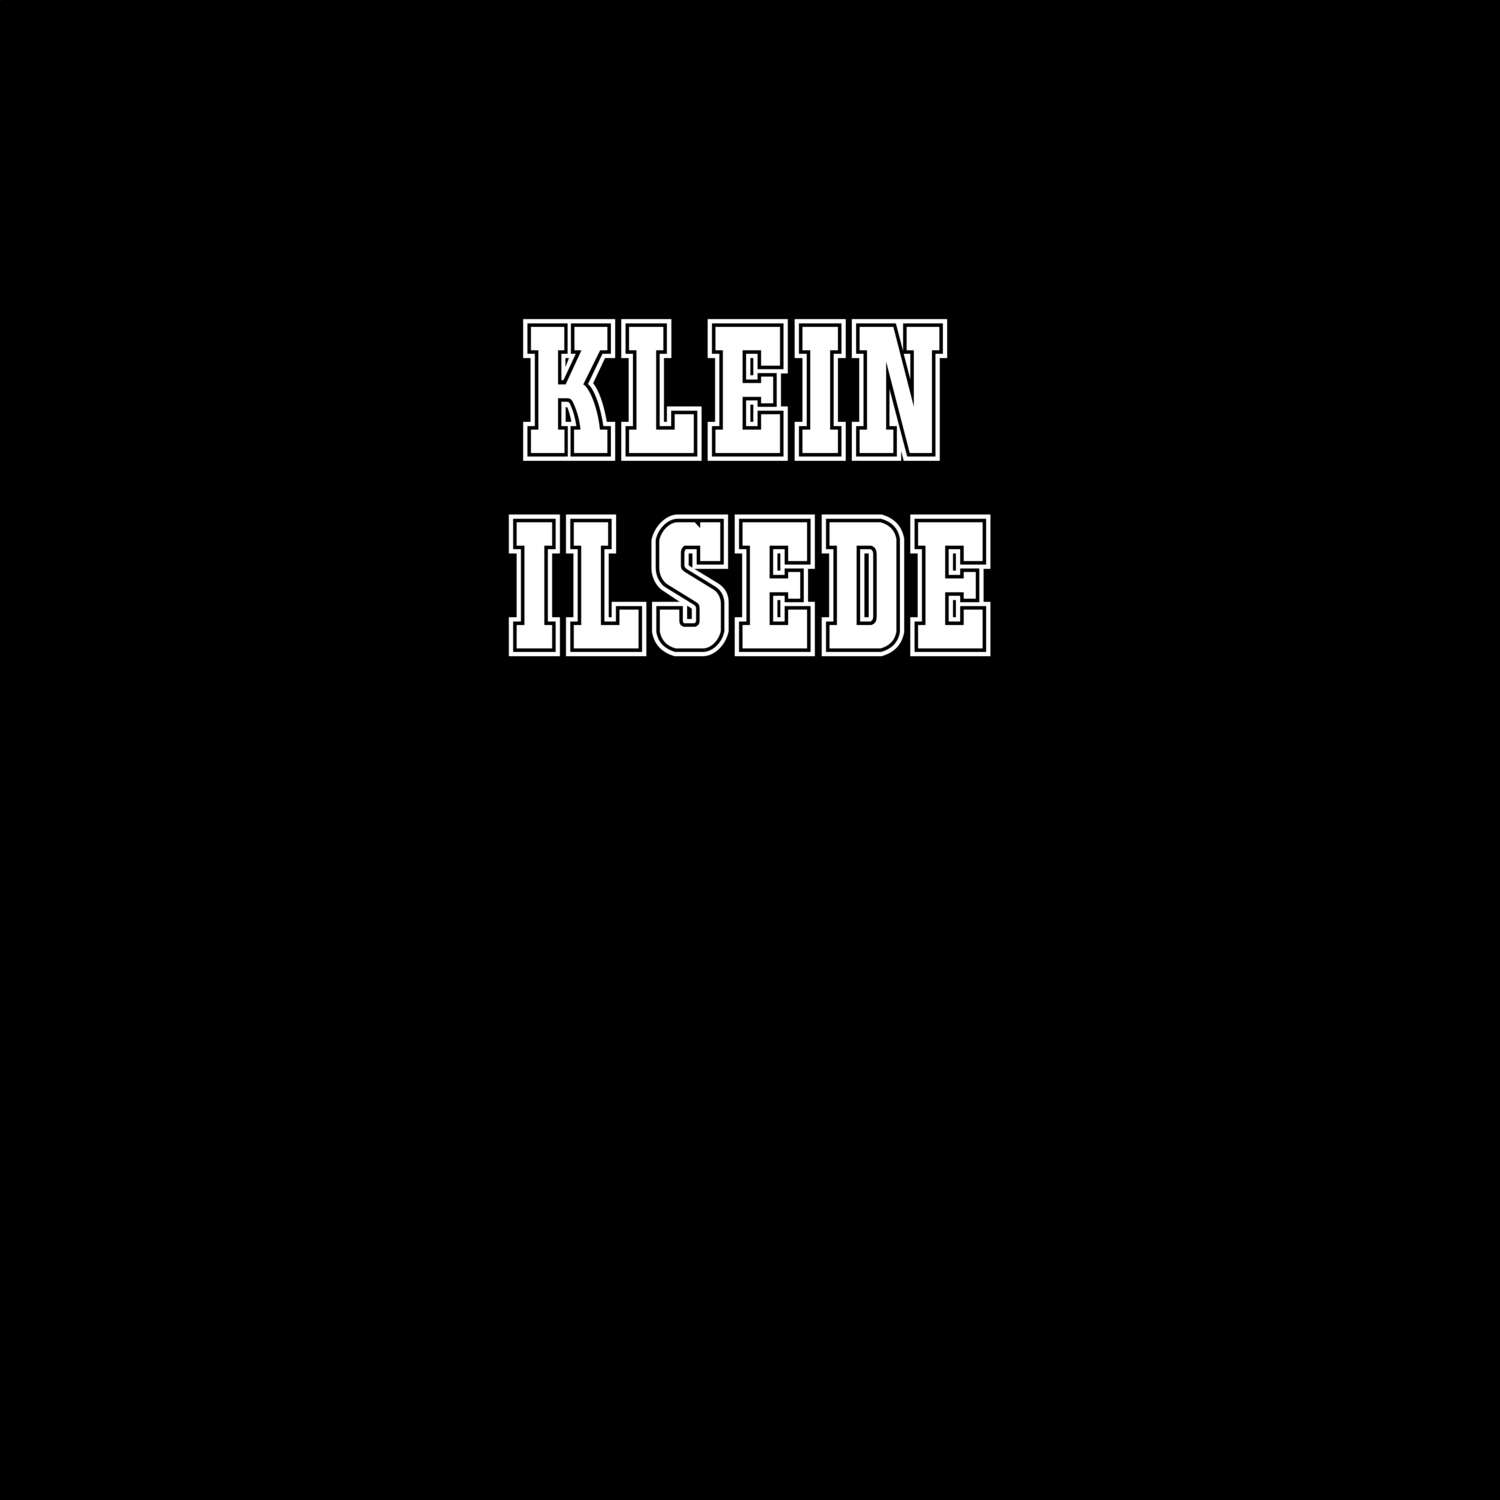 Klein Ilsede T-Shirt »Classic«